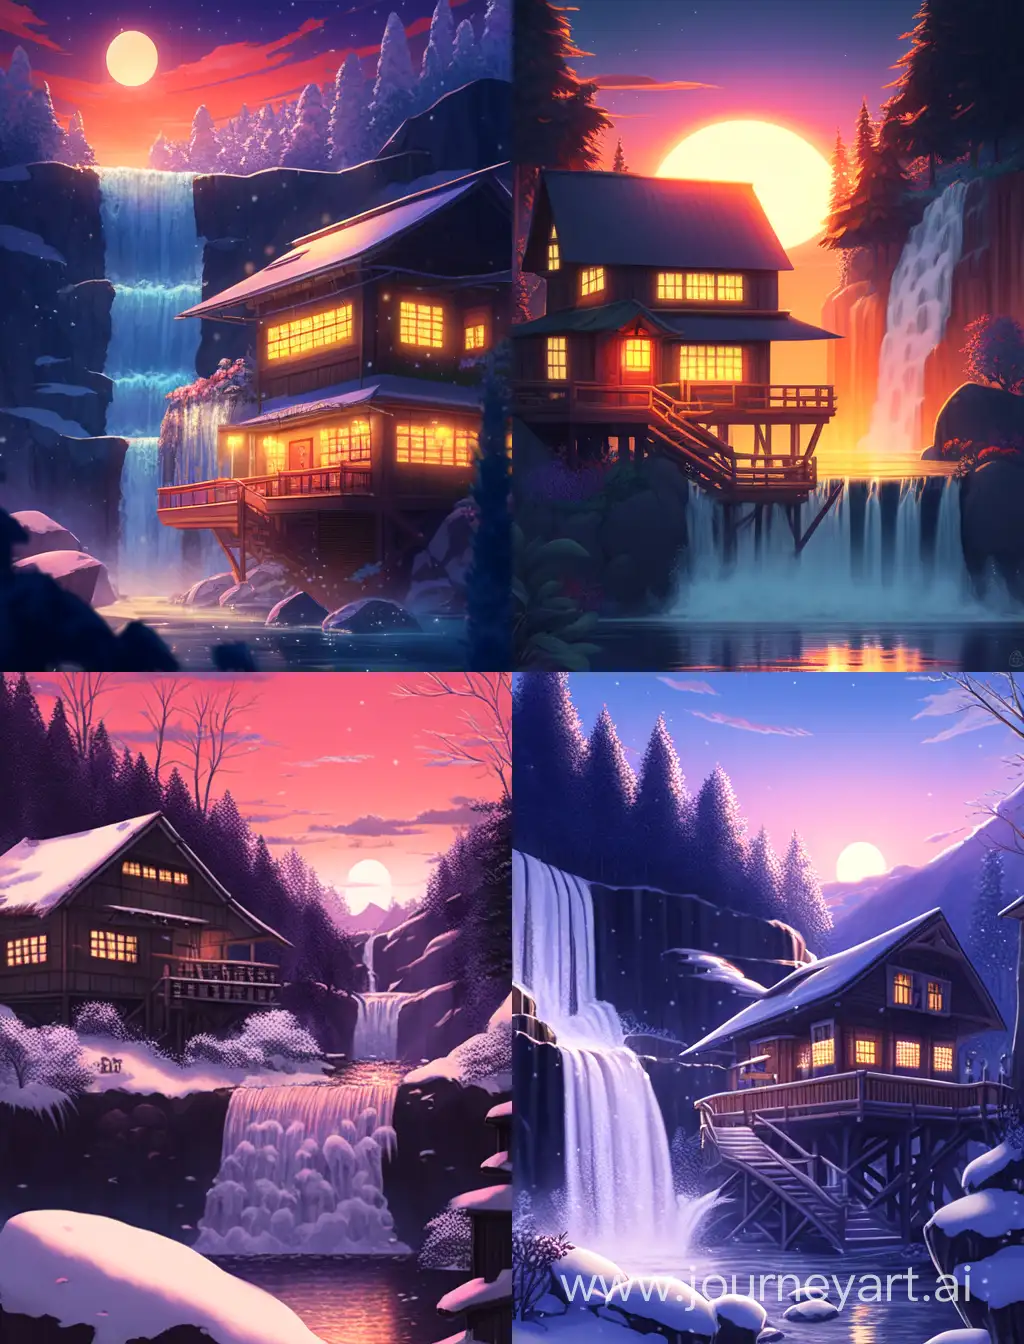 Enchanting-Winter-Evening-Moonlit-Waterfall-Surrounding-Cozy-Wooden-House